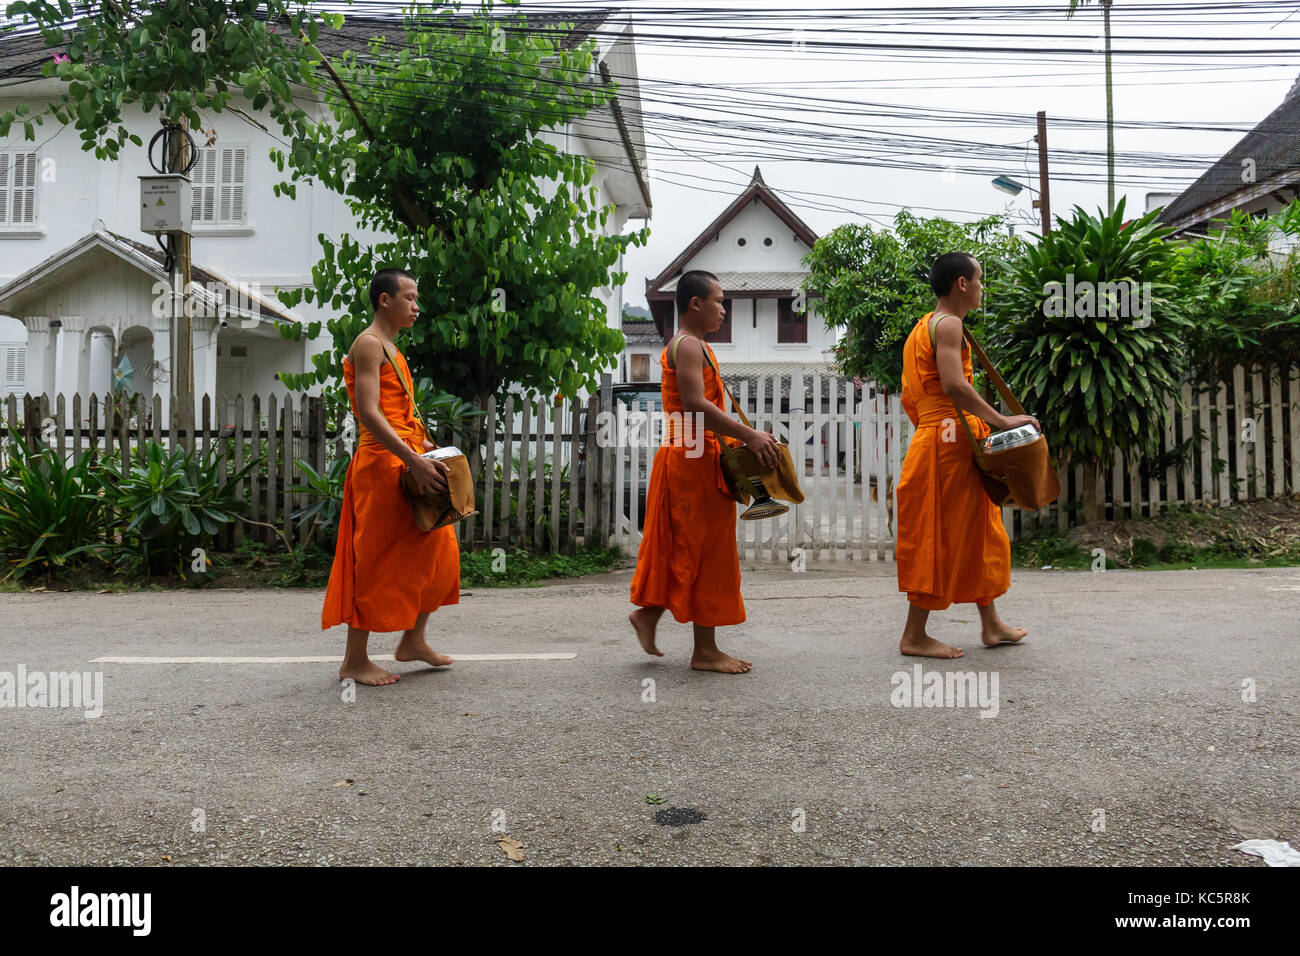 LUANG PRABANG, LAOS - 9/24/2017: Novice Buddhist monks collect alms in Luang Prabang, Laos Stock Photo